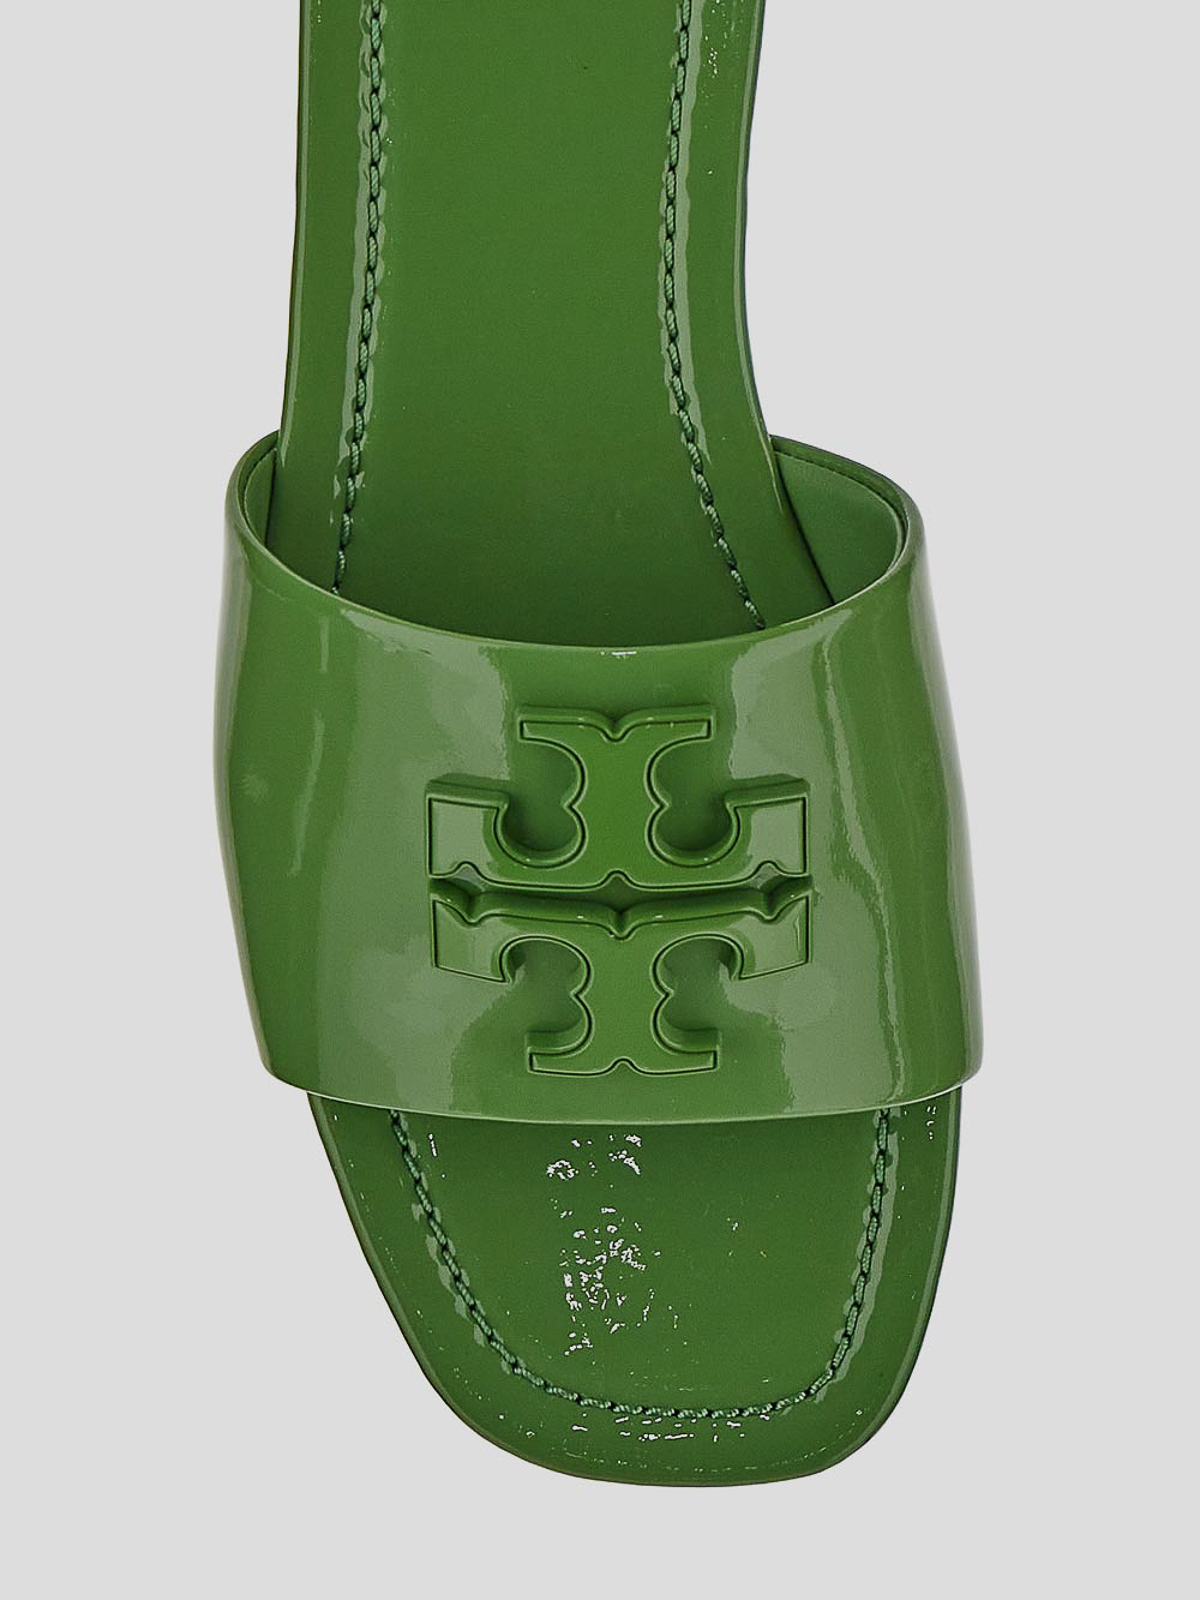 Shop Tory Burch Sandals In Green